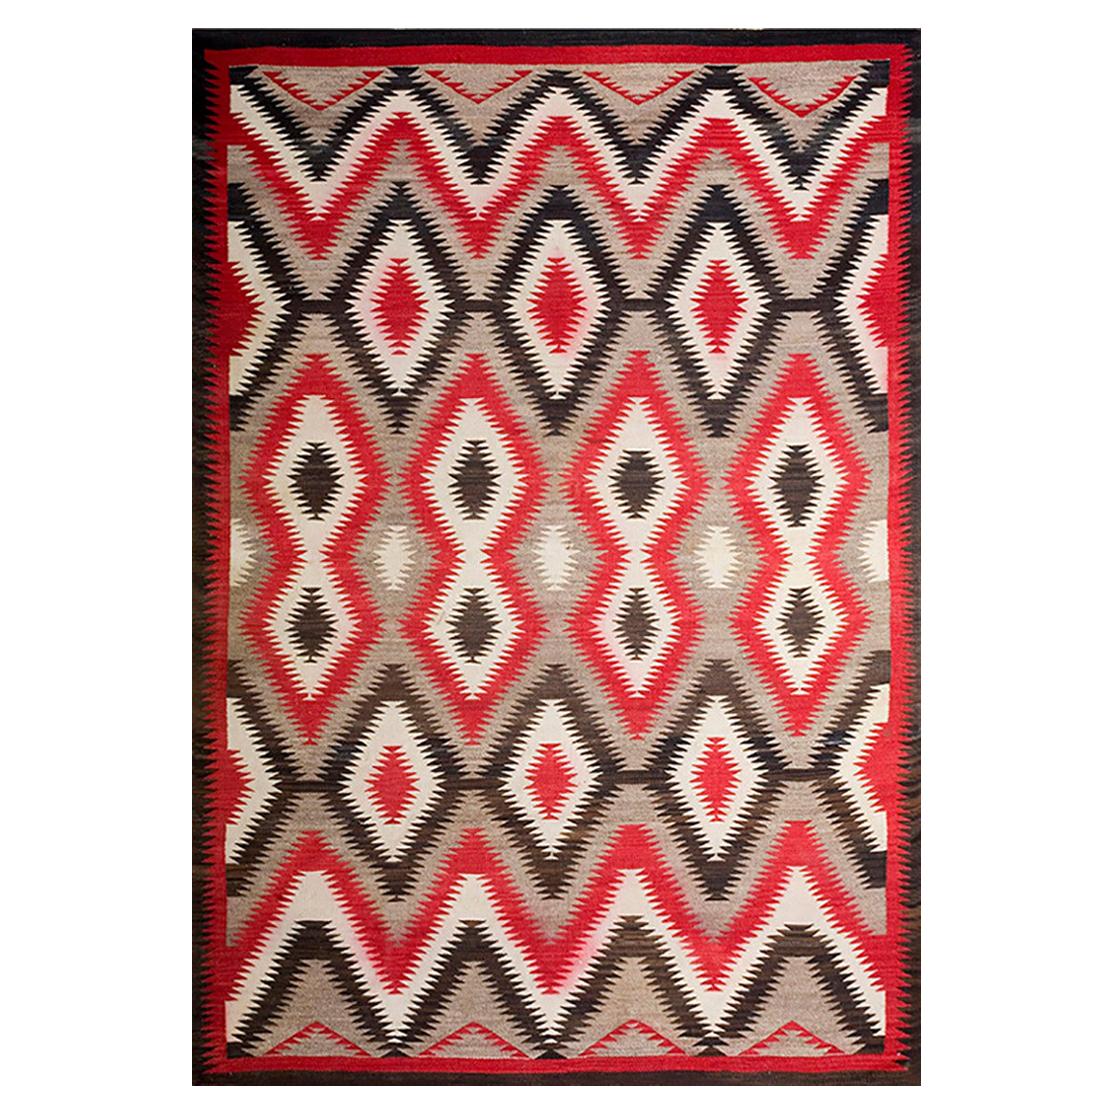 Early 20th Century American Navajo Carpet  ( 6'3" x 9' - 191 x 275 )